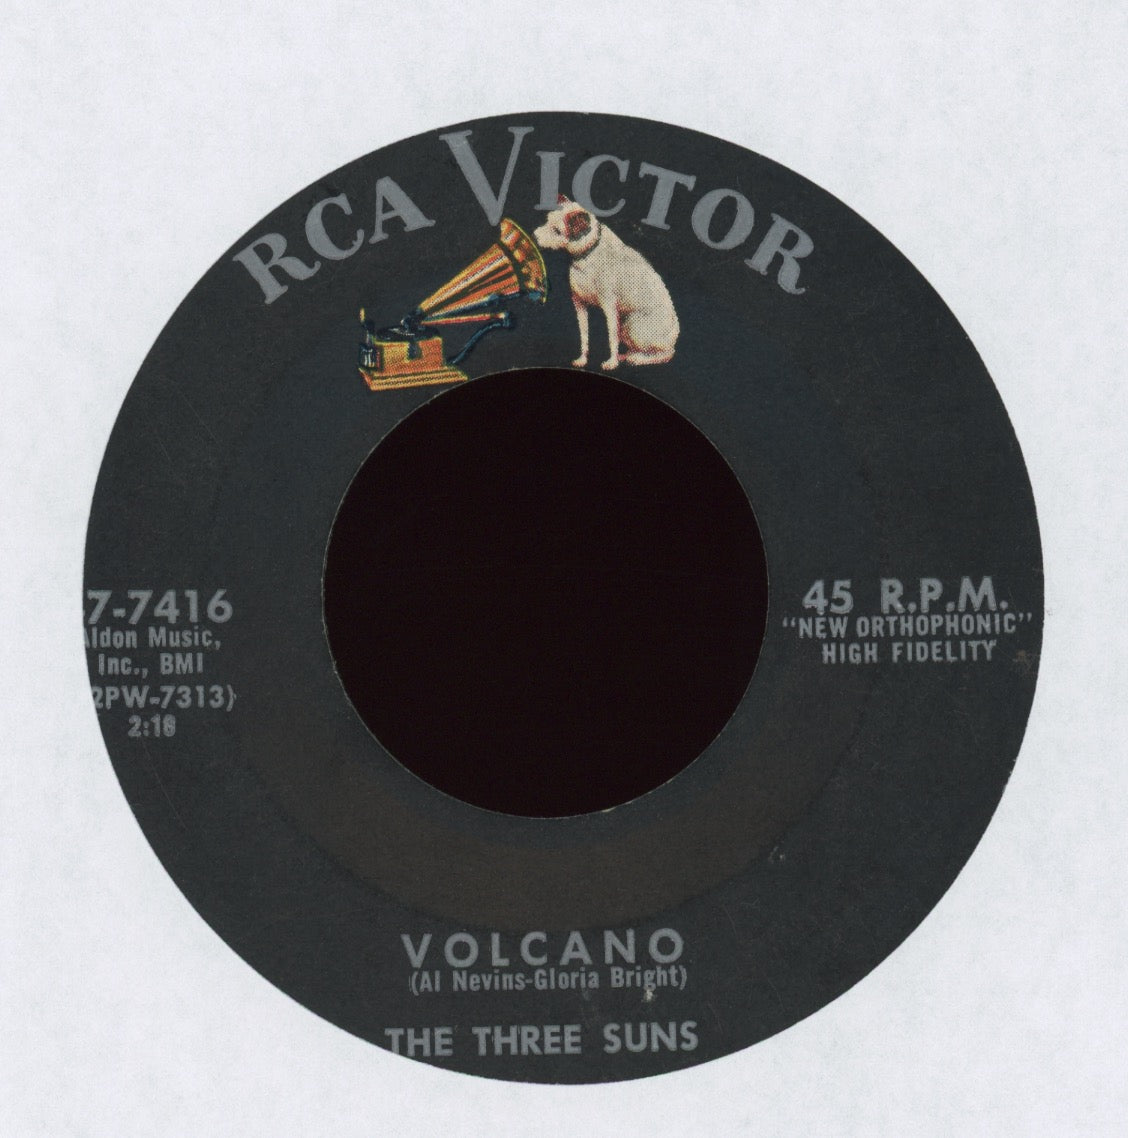 The Three Suns - Volcano on RCA